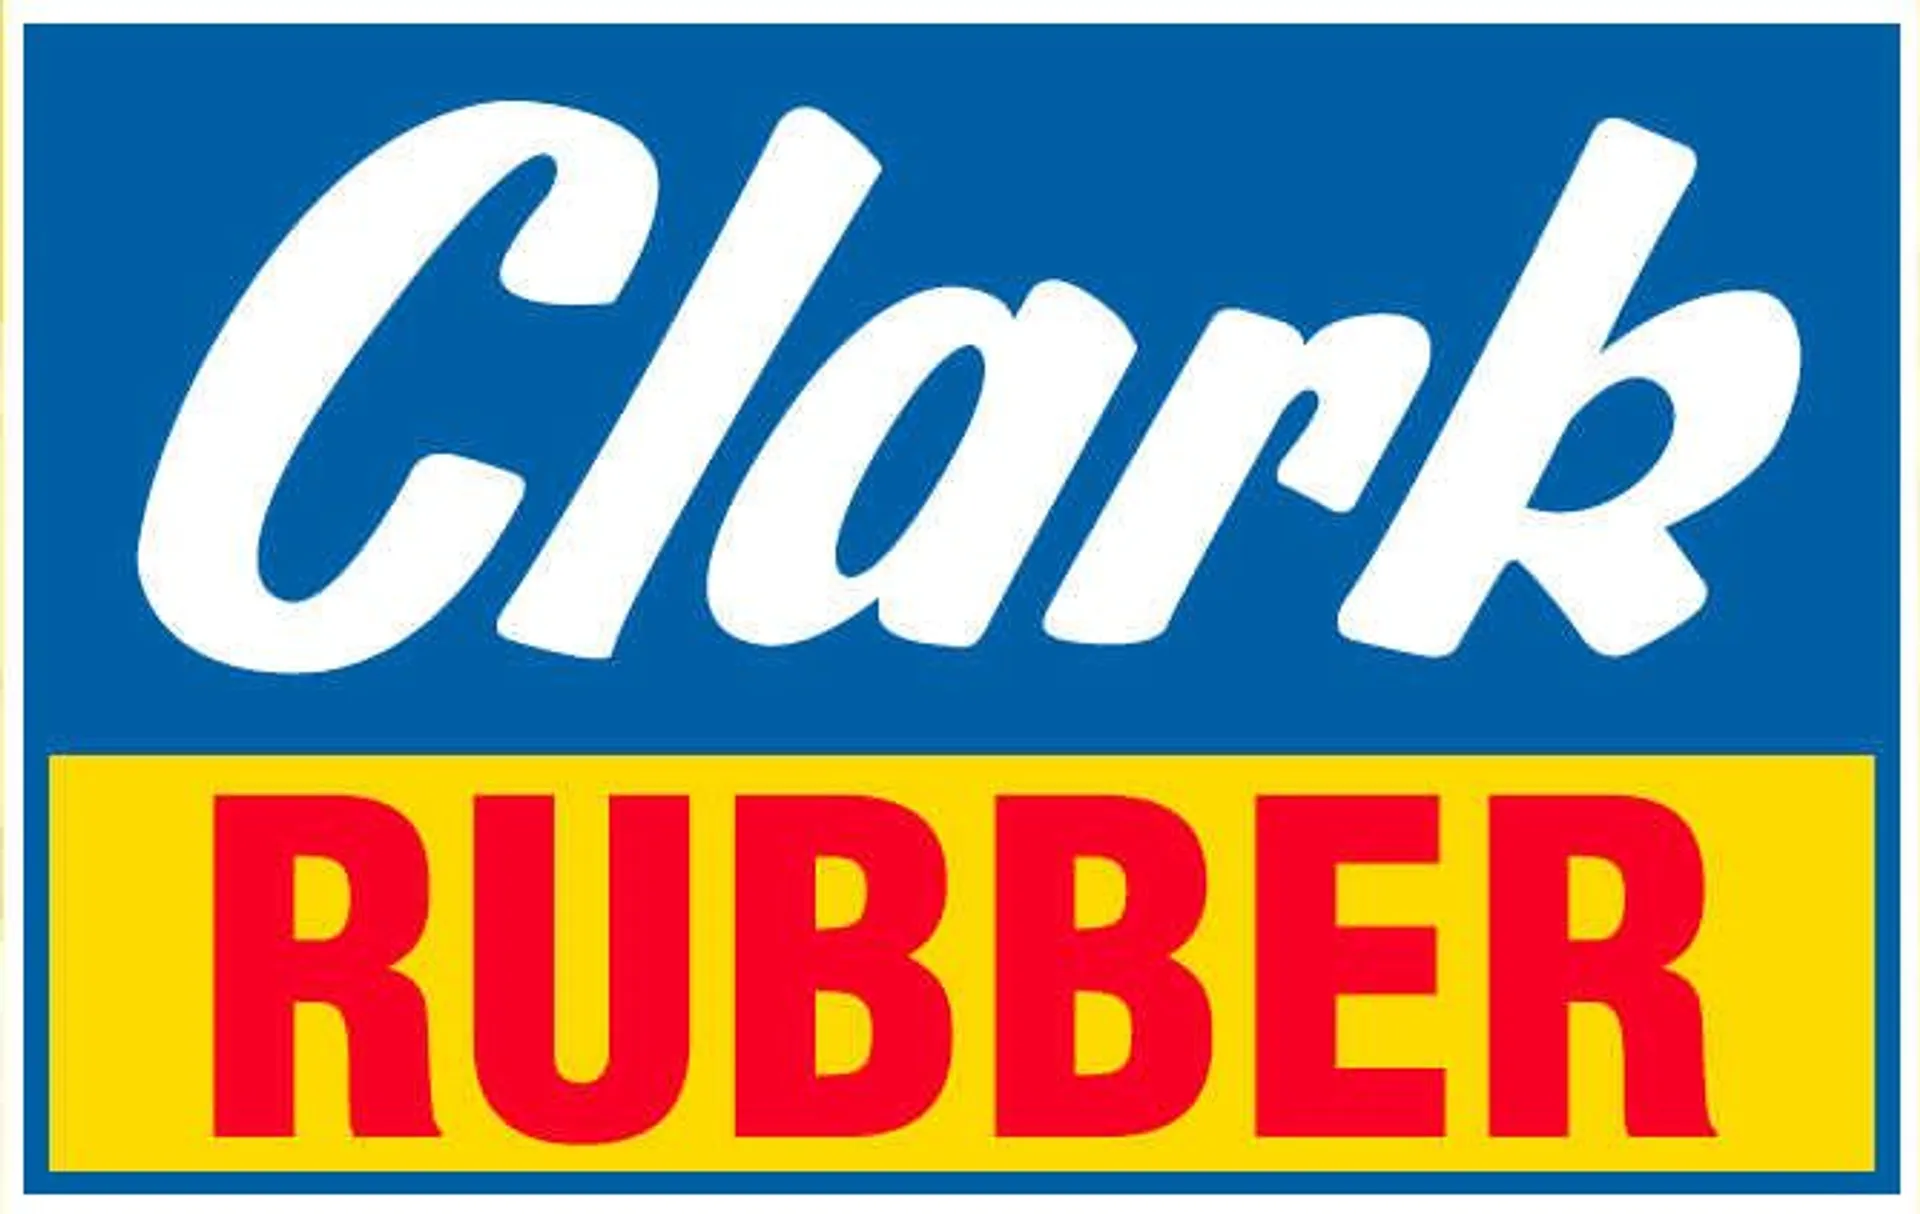 CLARK RUBBER logo of current flyer